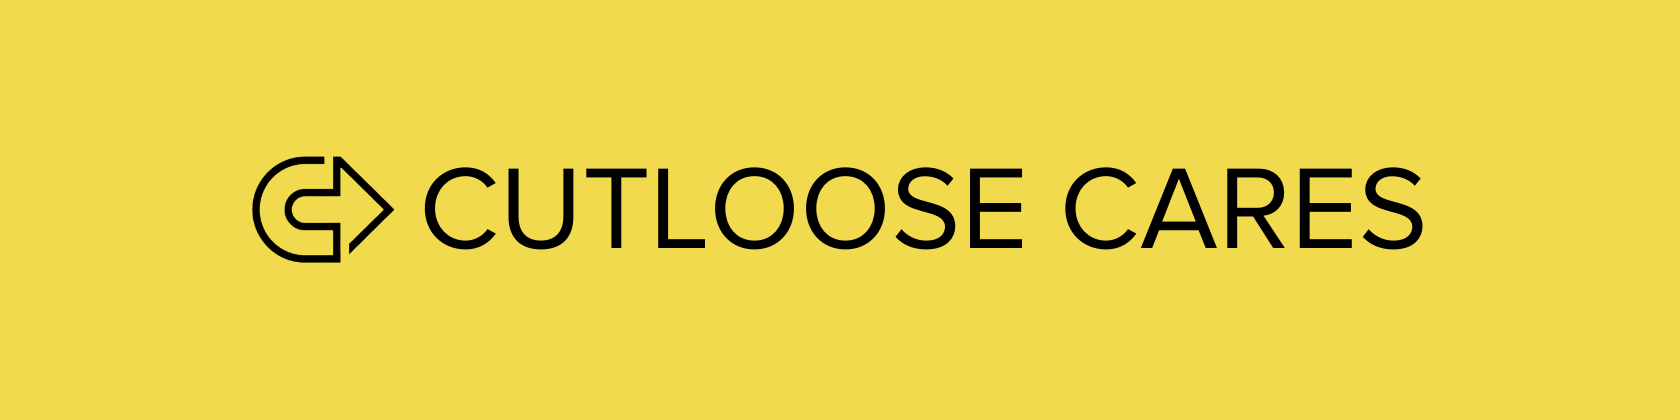 CUTLOOSE CARES logo